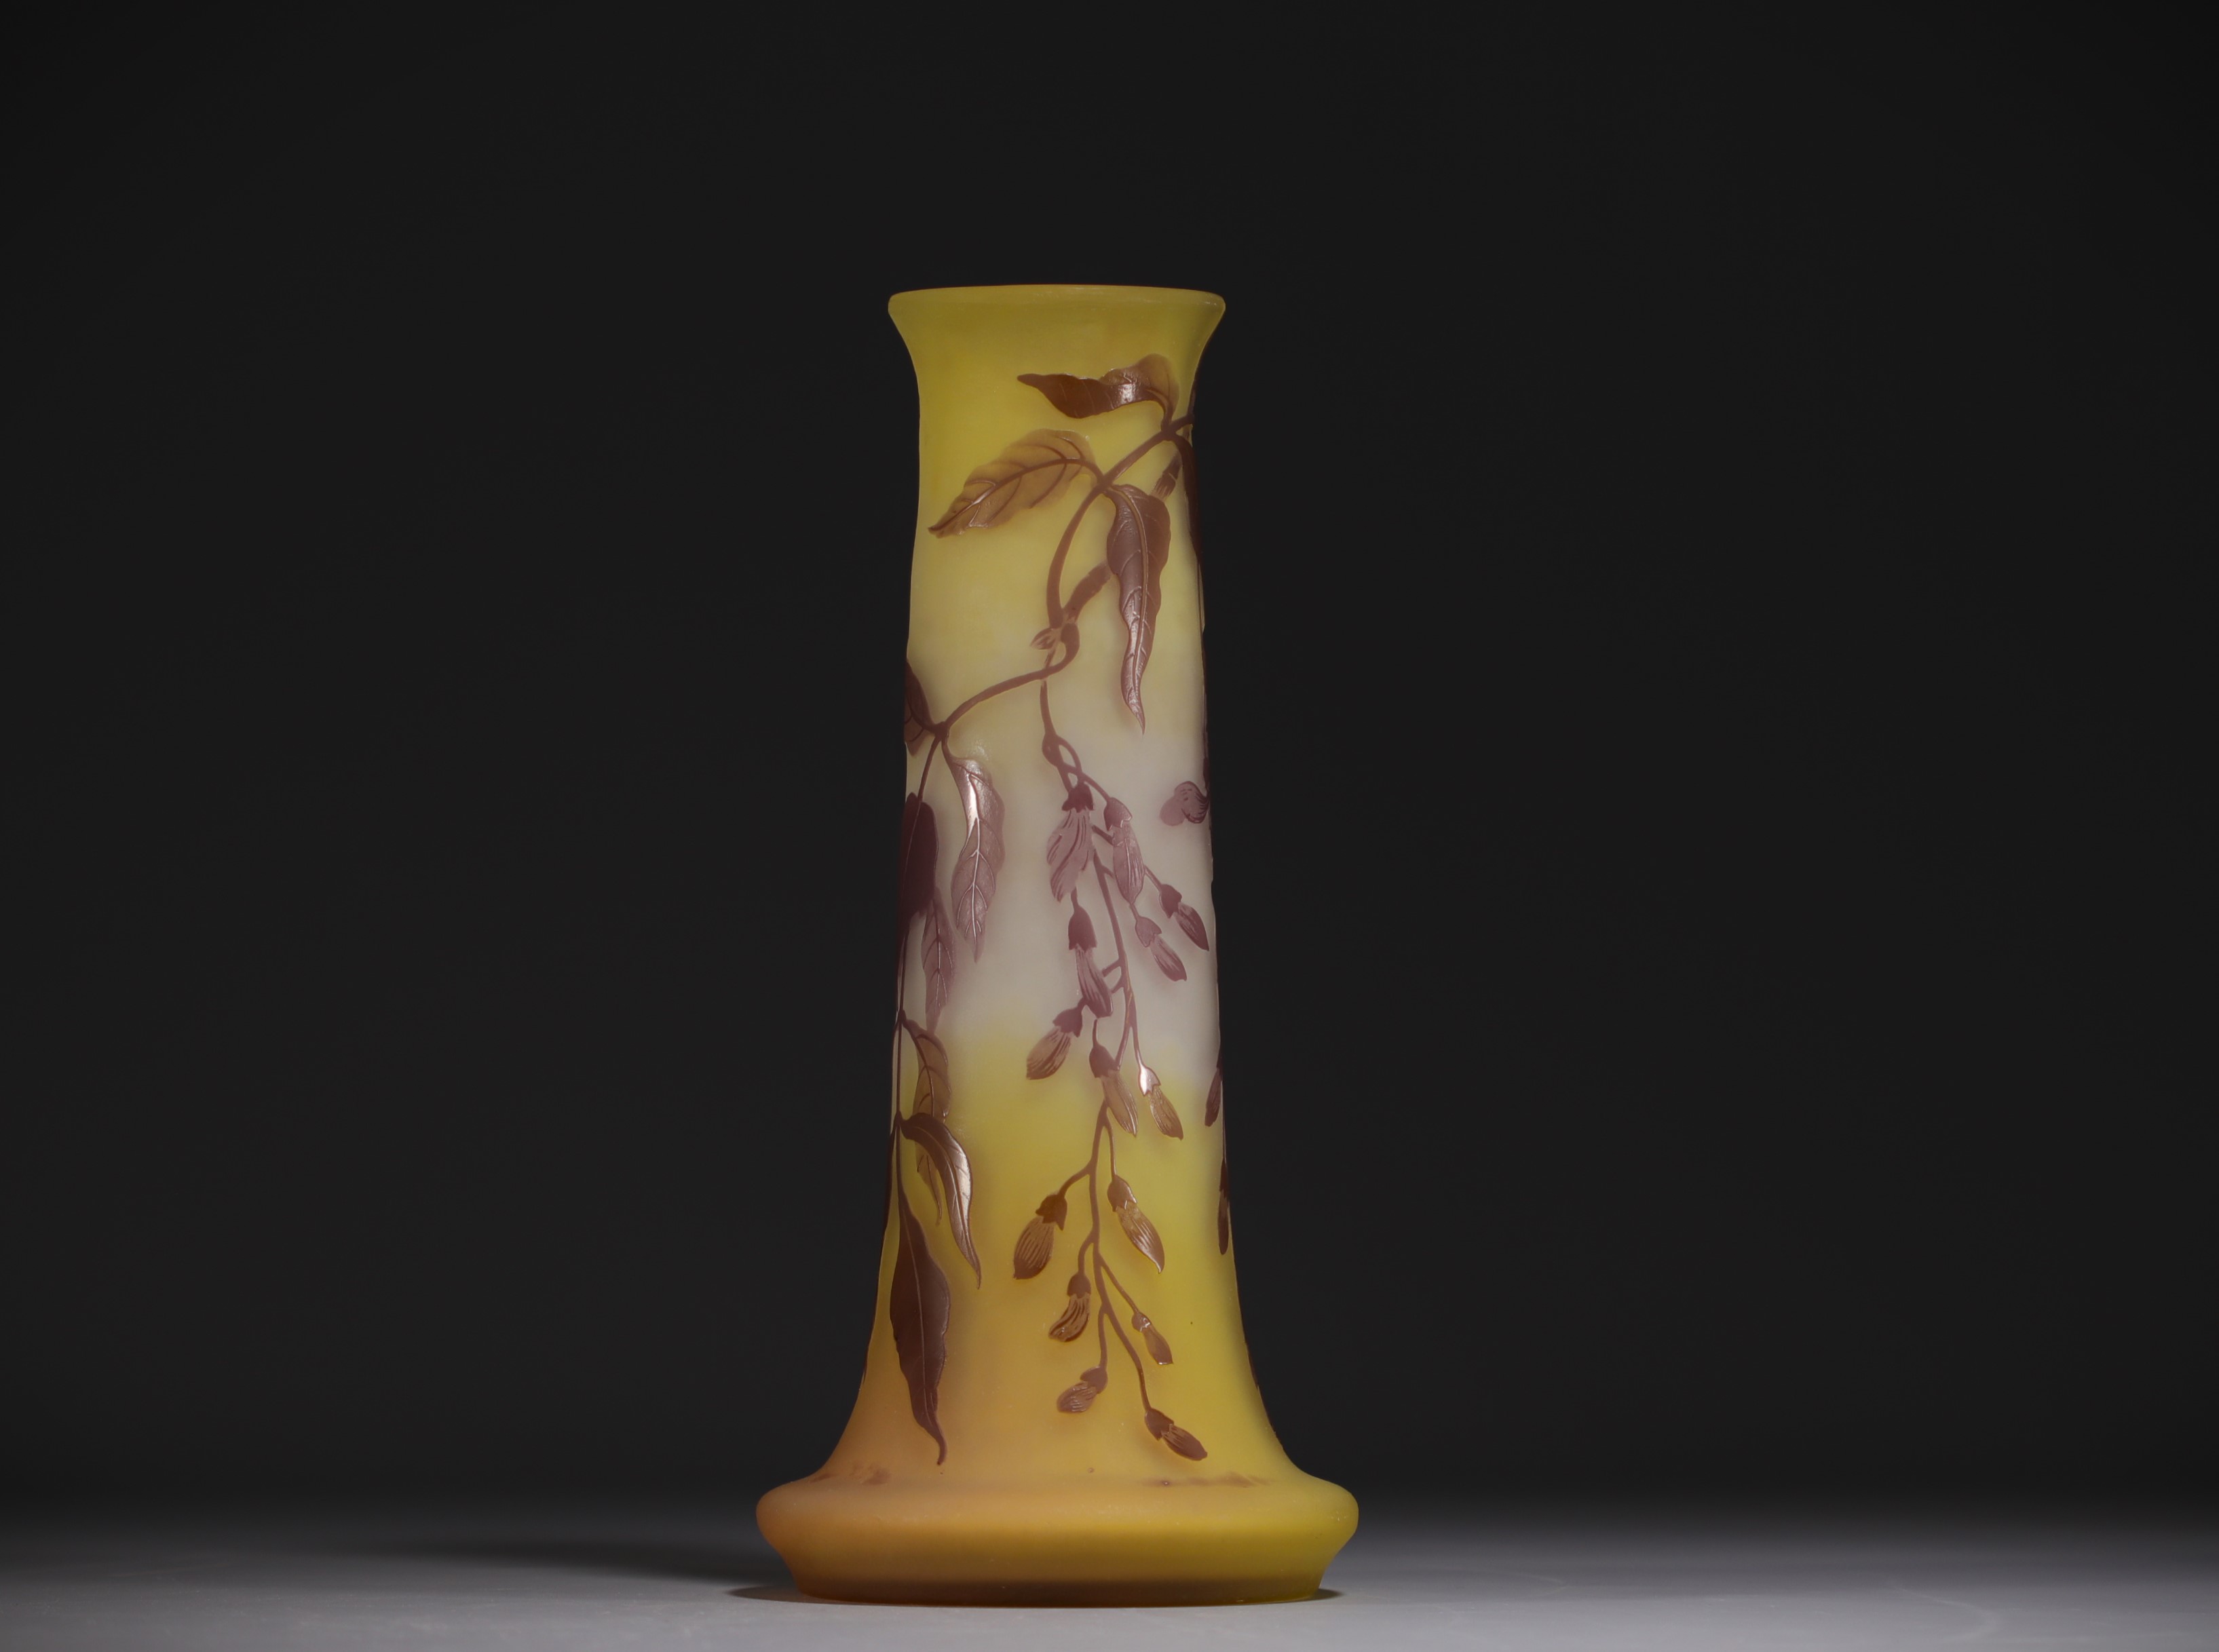 Emile GALLE (1846-1904) Large acid-etched multi-layered glass vase, wisteria design, signed. - Image 3 of 4